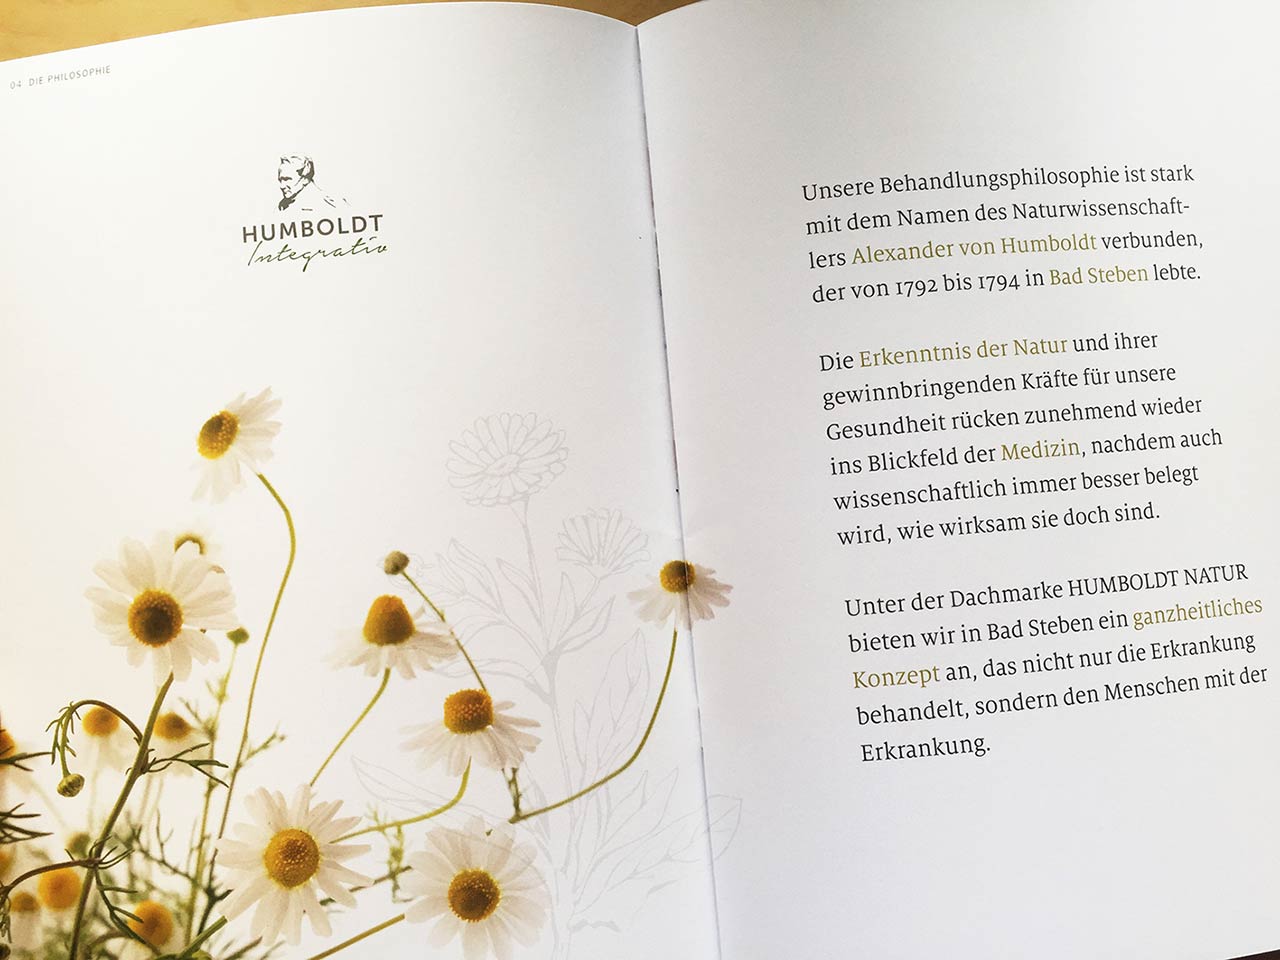 Humboldt Integrative Broschüre Humboldt becomes a brand